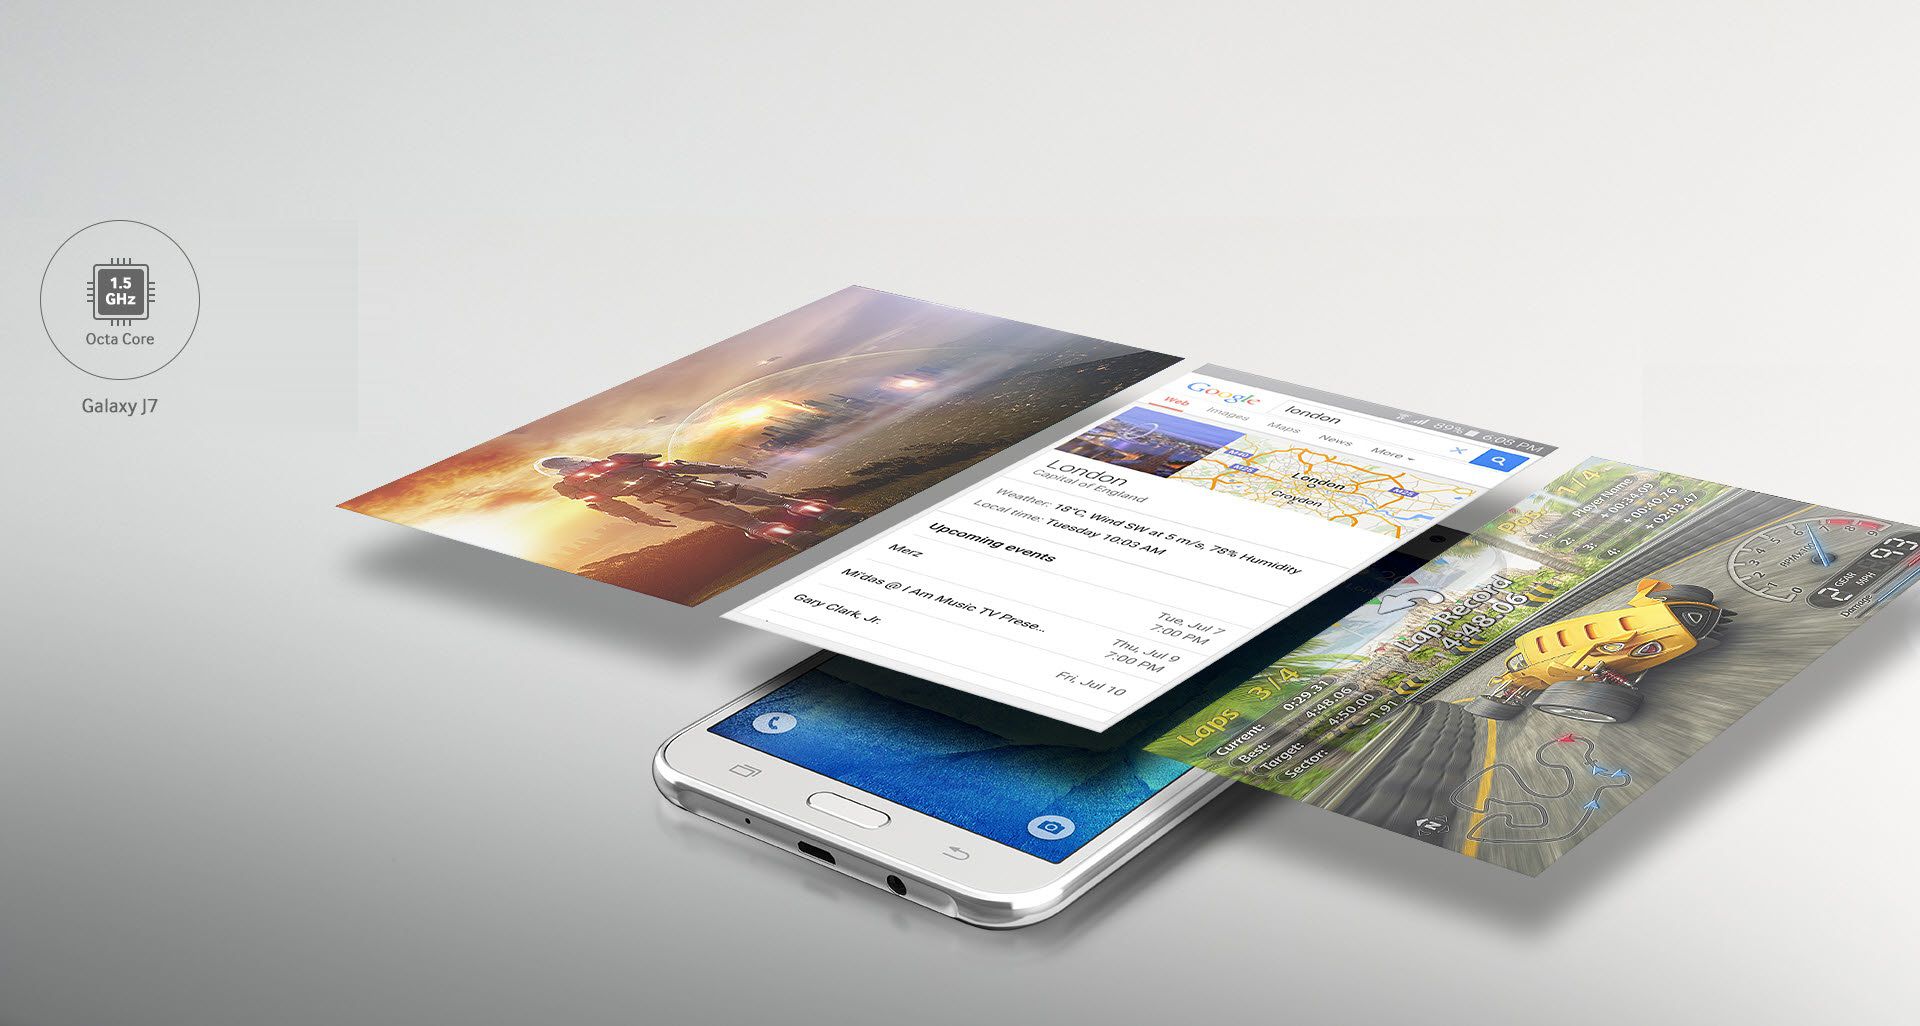 [image] Samsung Galaxy J7 Specifications Kenya